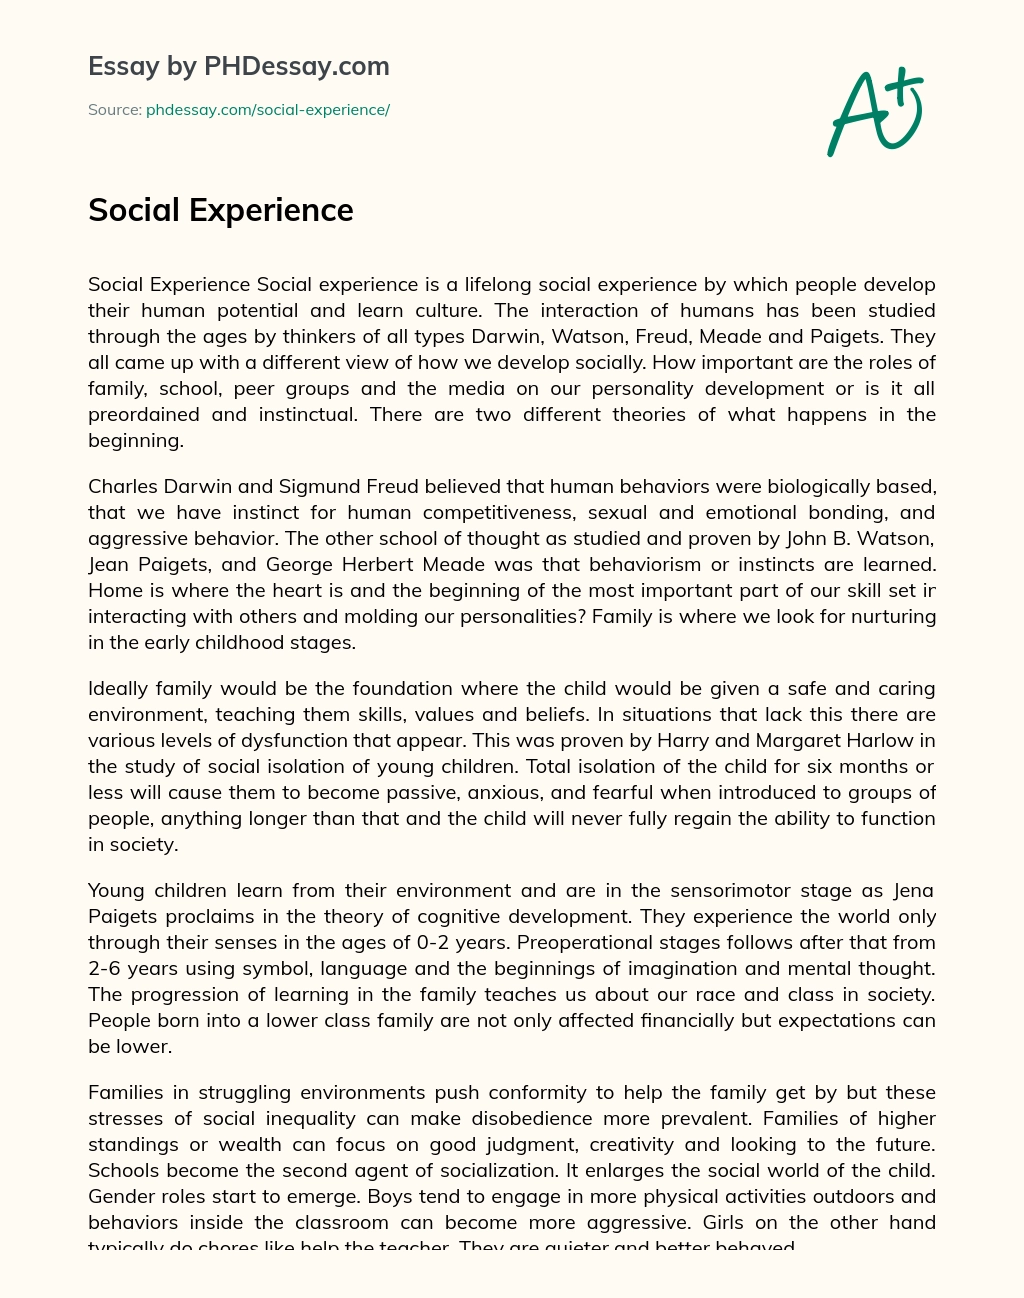 Social Experience essay